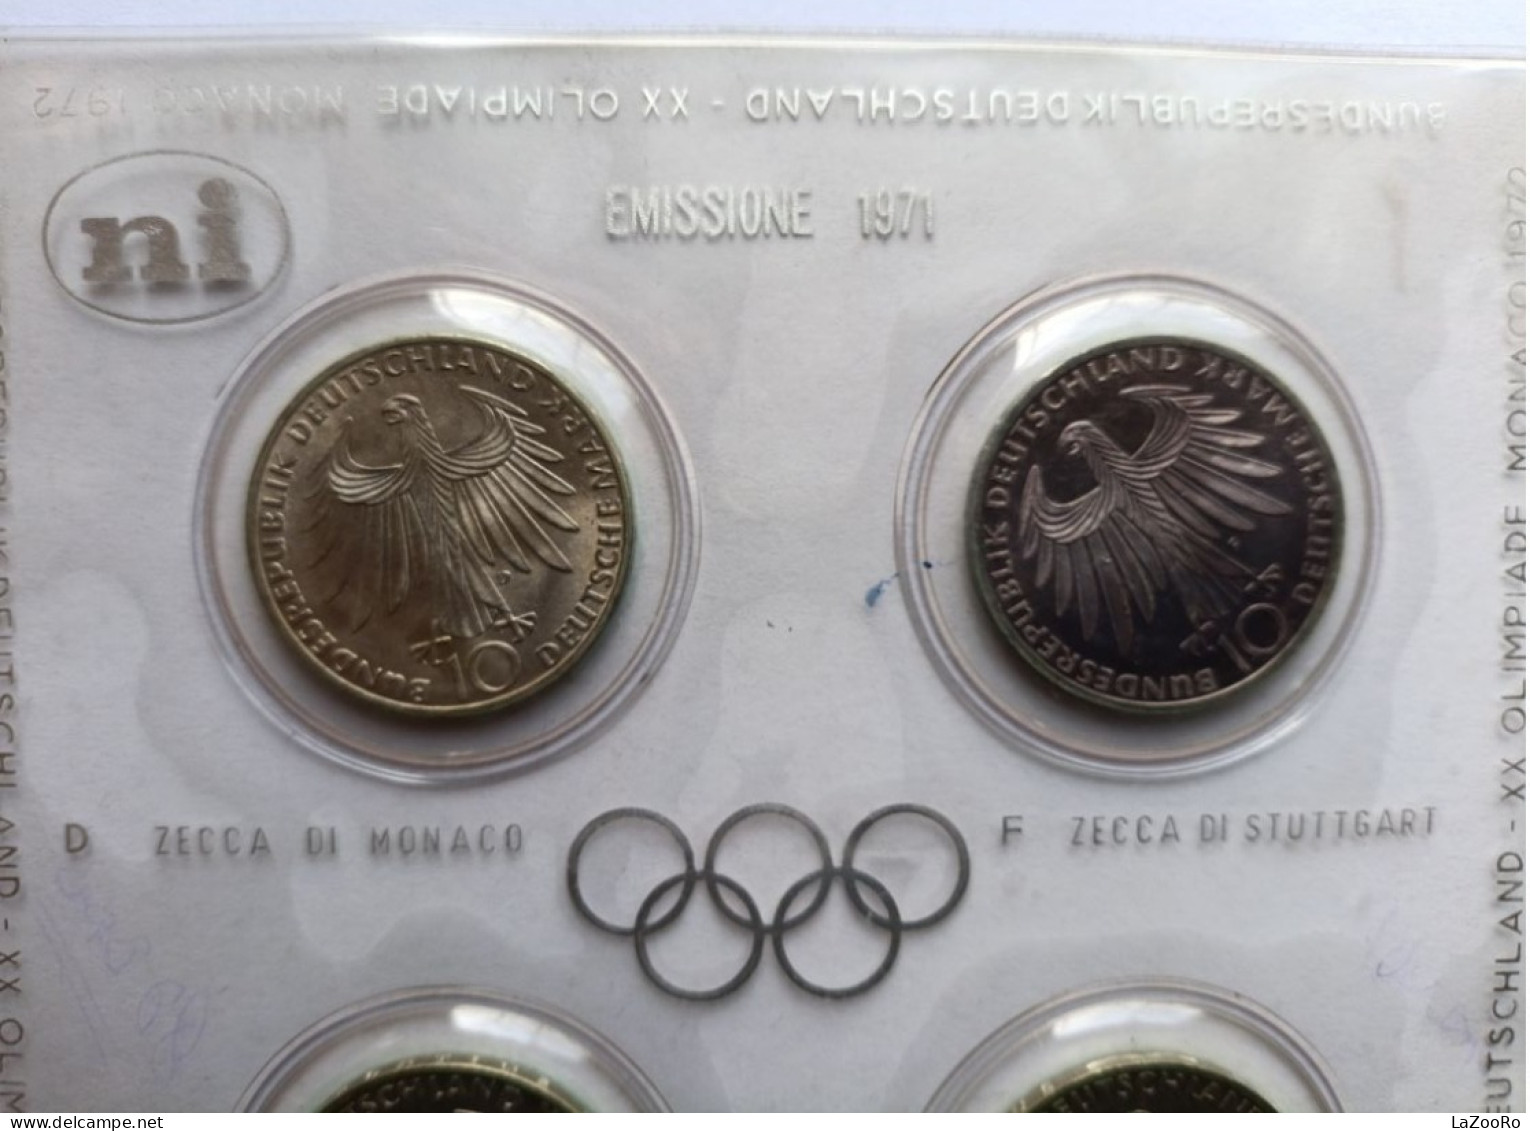 LaZooRo: Germany 4 X 10 Mark 1971 D F G J XX Olimpiade Monaco 1972 PROOF Set Scarce - Silver - Commemorative